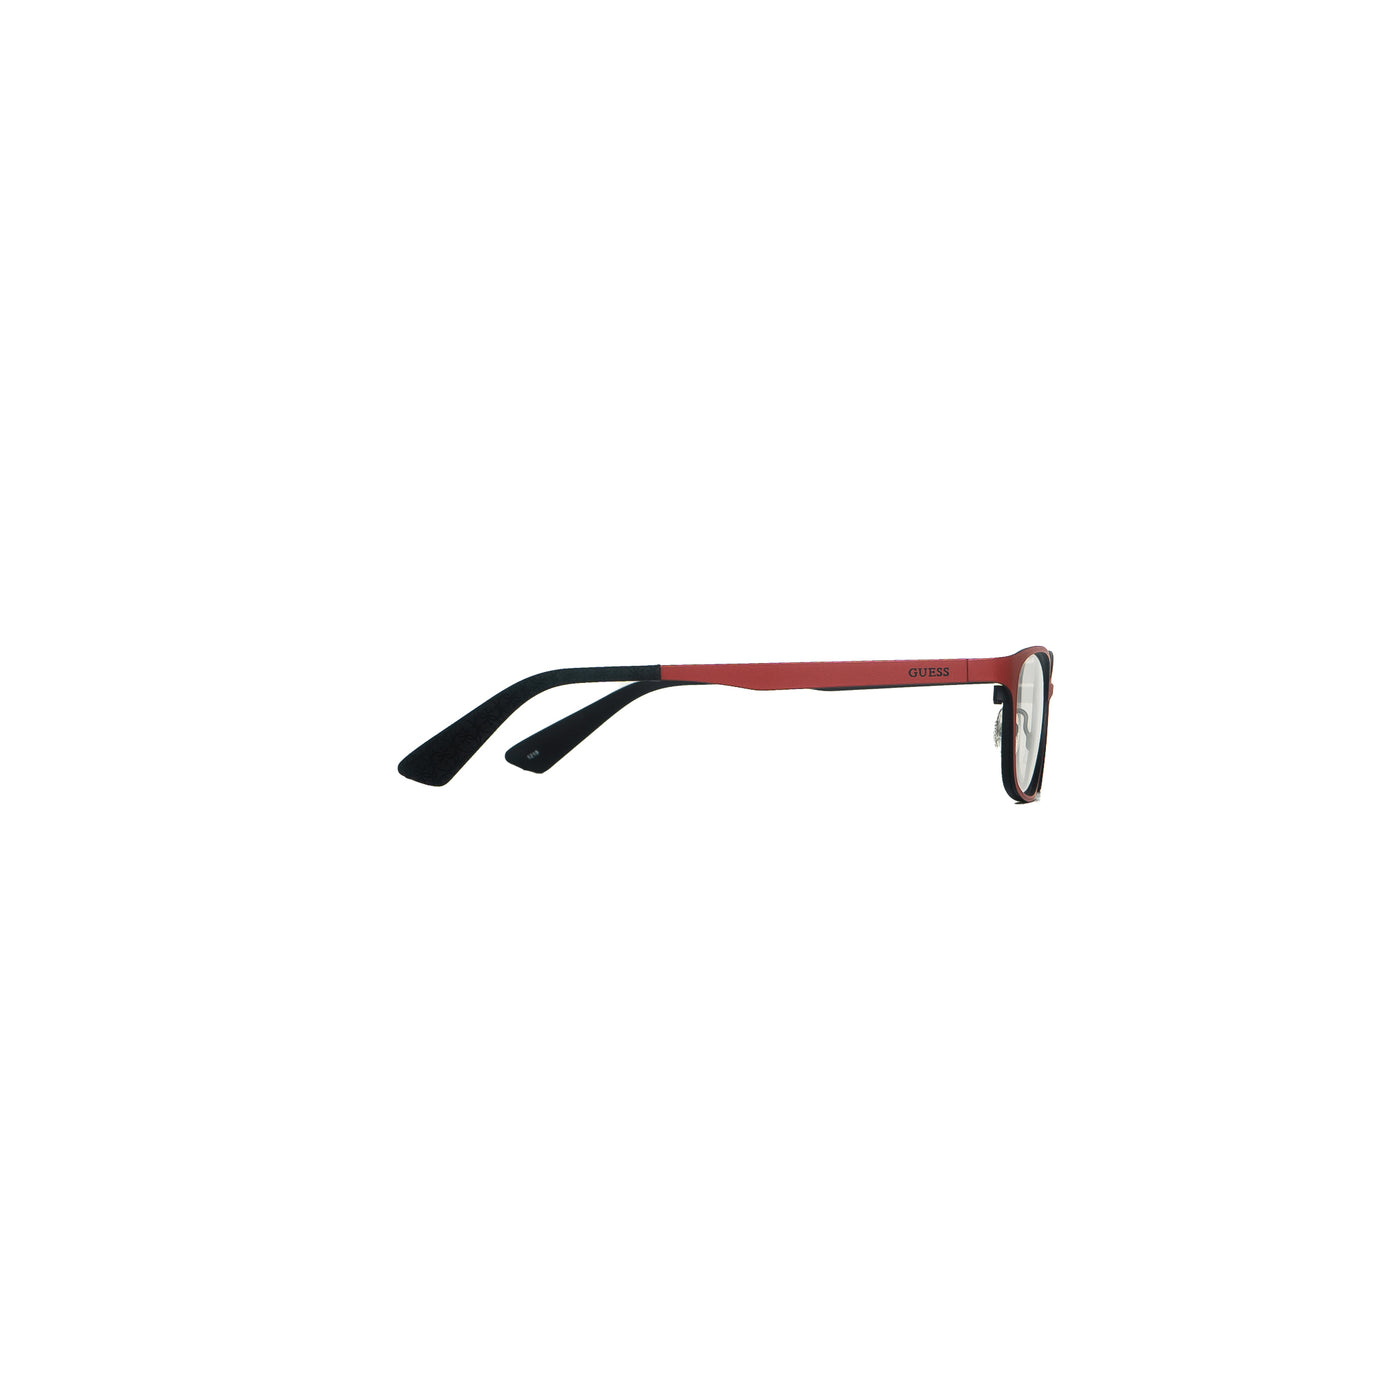 Guess Eyeglasses | GU2563/067 - Vision Express Optical Philippines